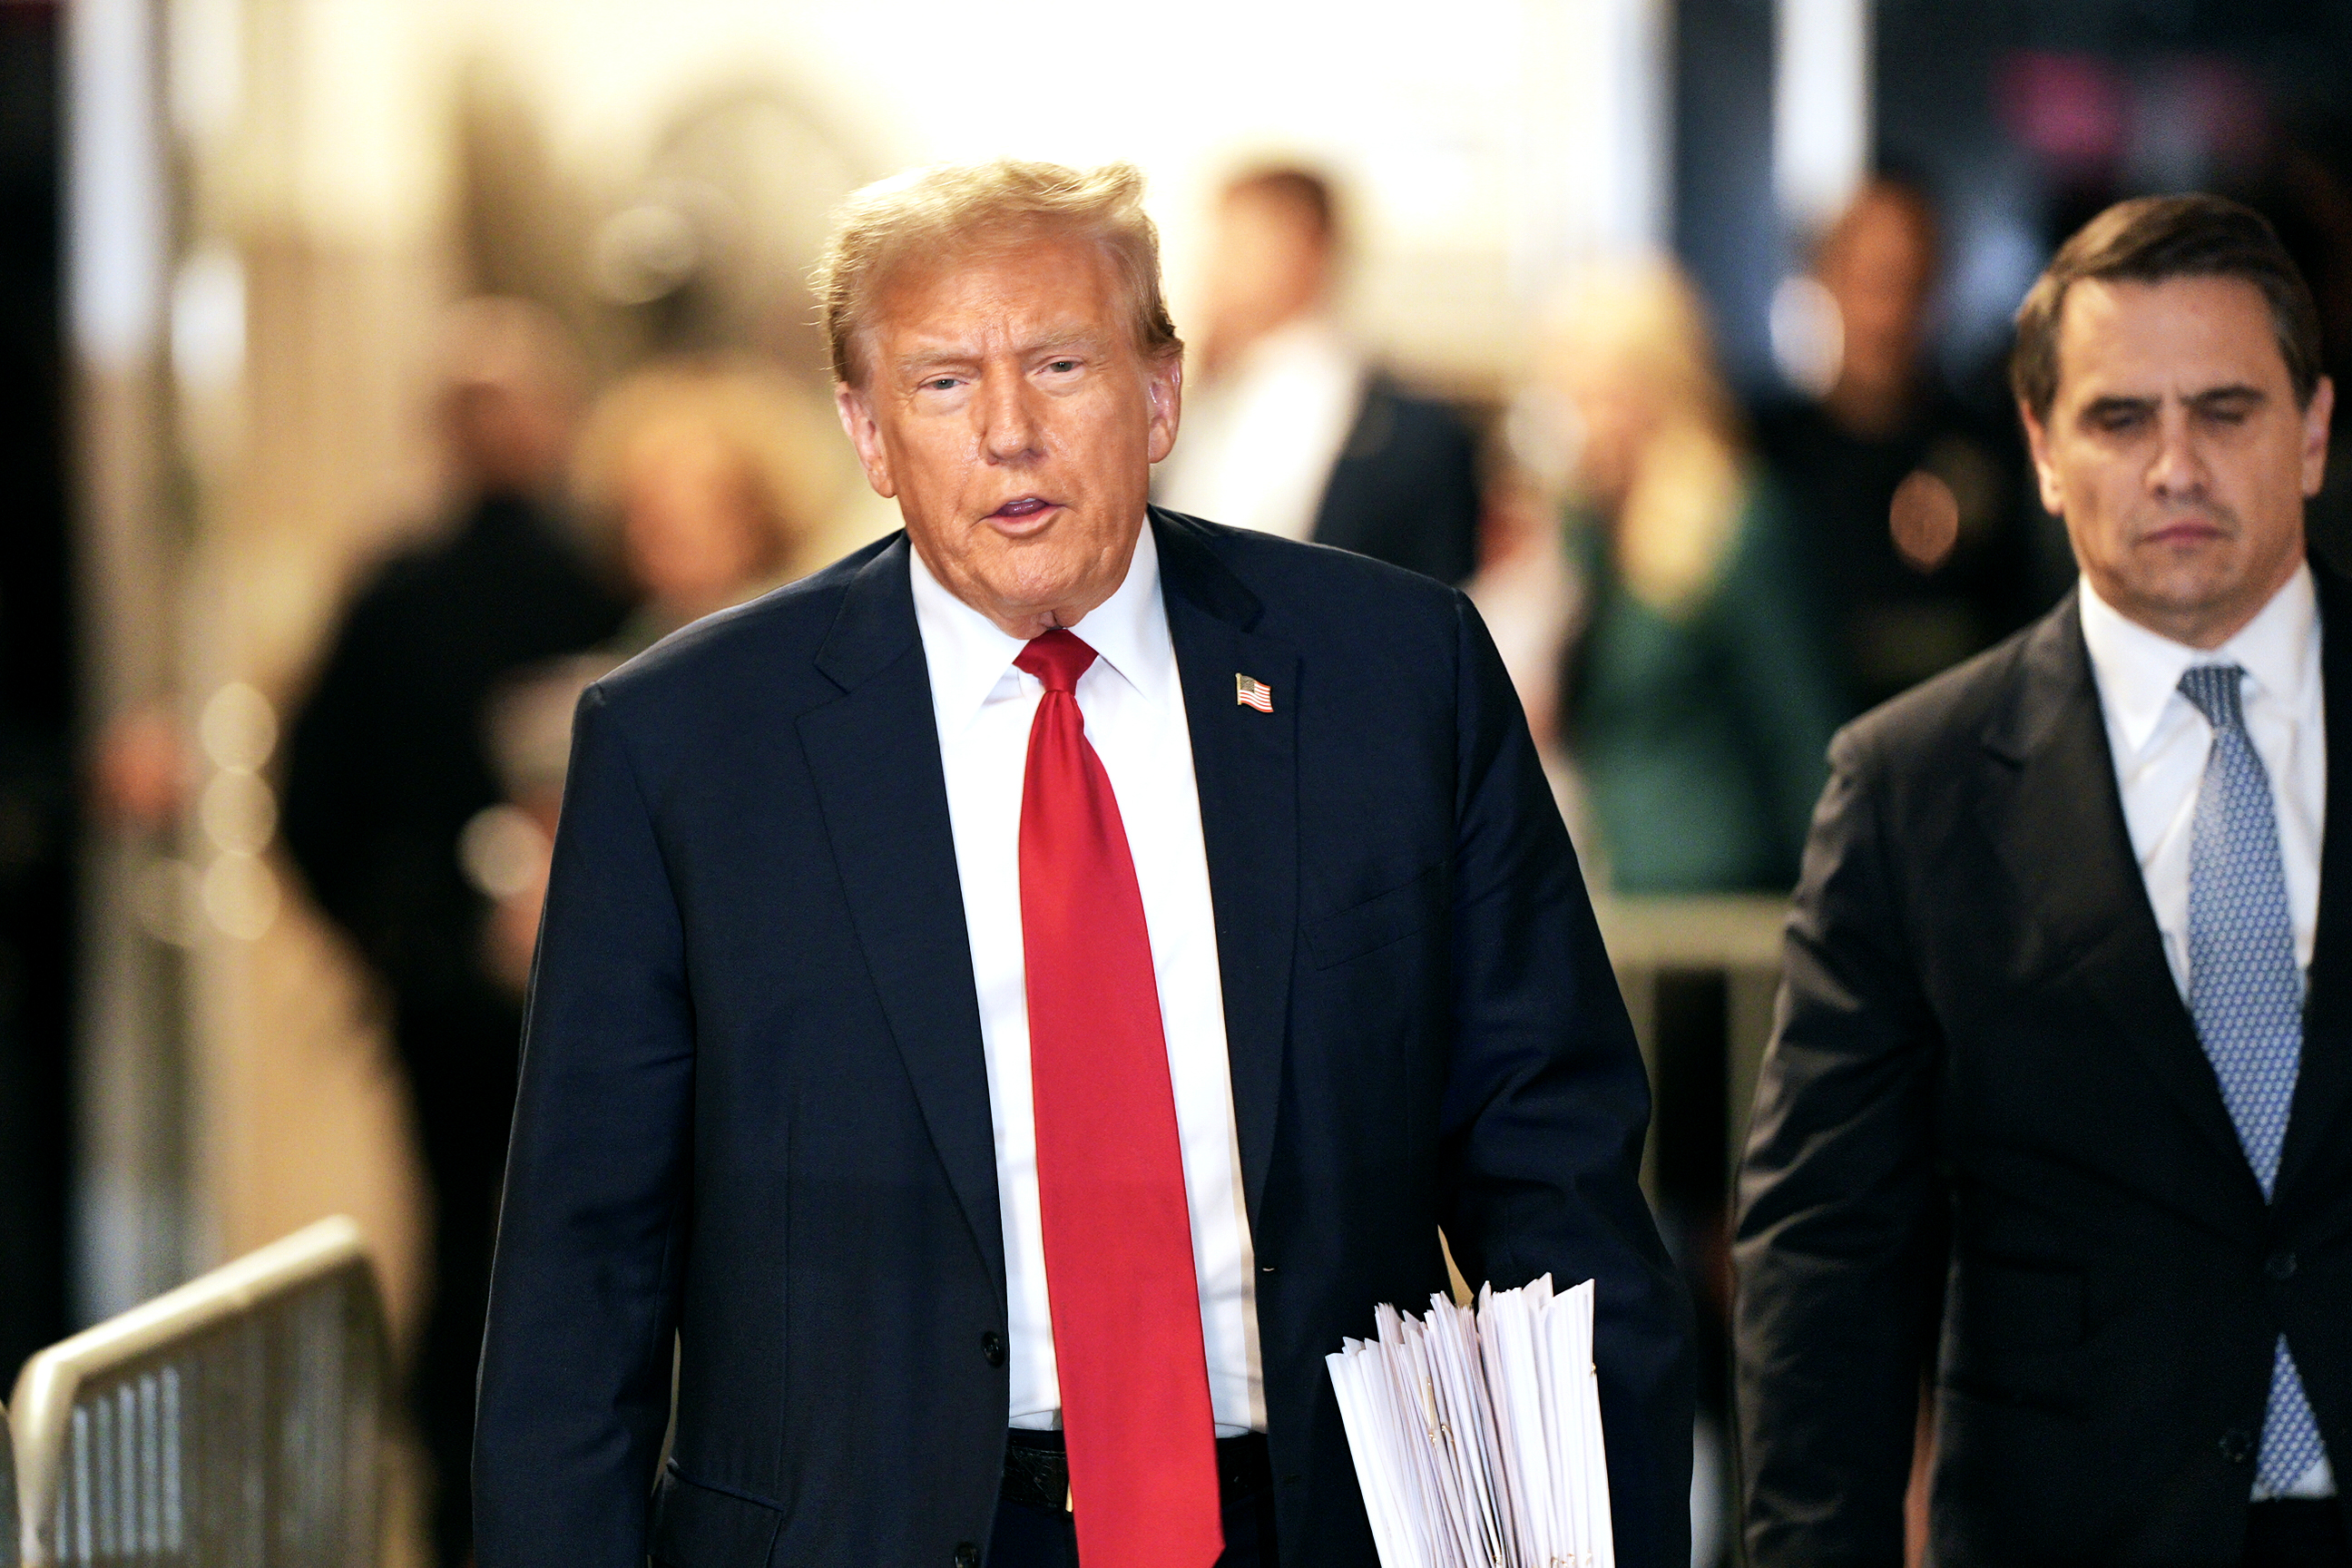 Fani Willis Will Be 'Very Dismissive' Of Trump's Latest Move: Attorney